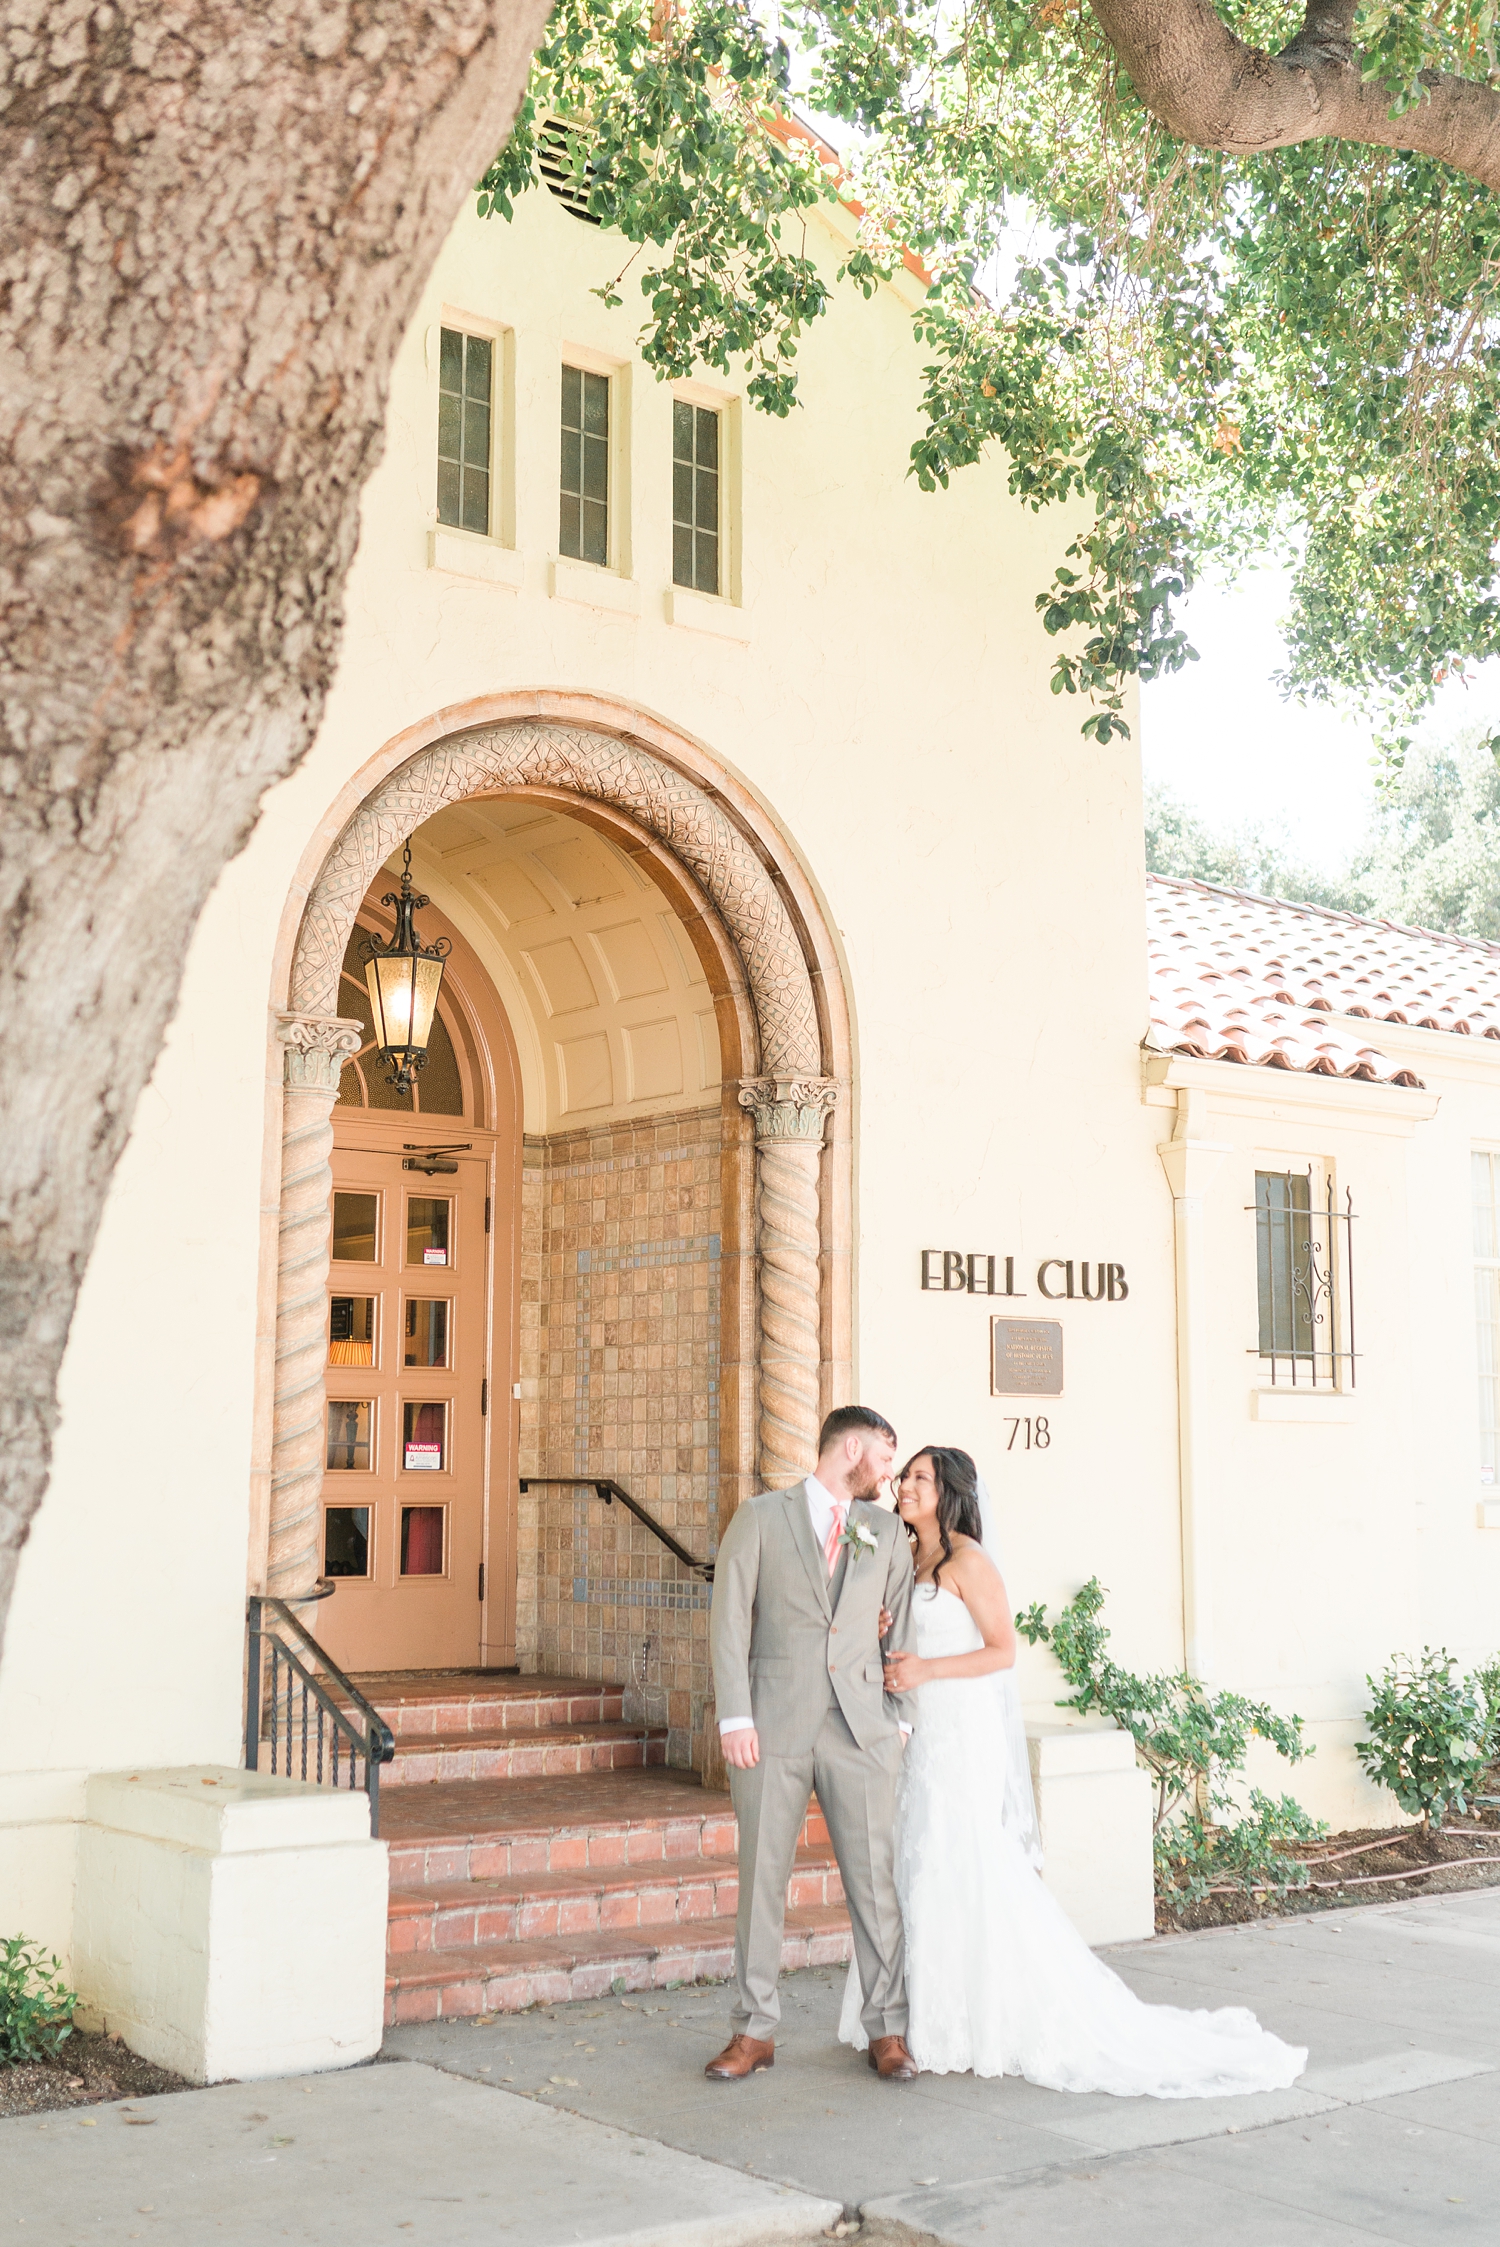 Ebell Club of Santa Ana OC Wedding Photographer_0049.jpg